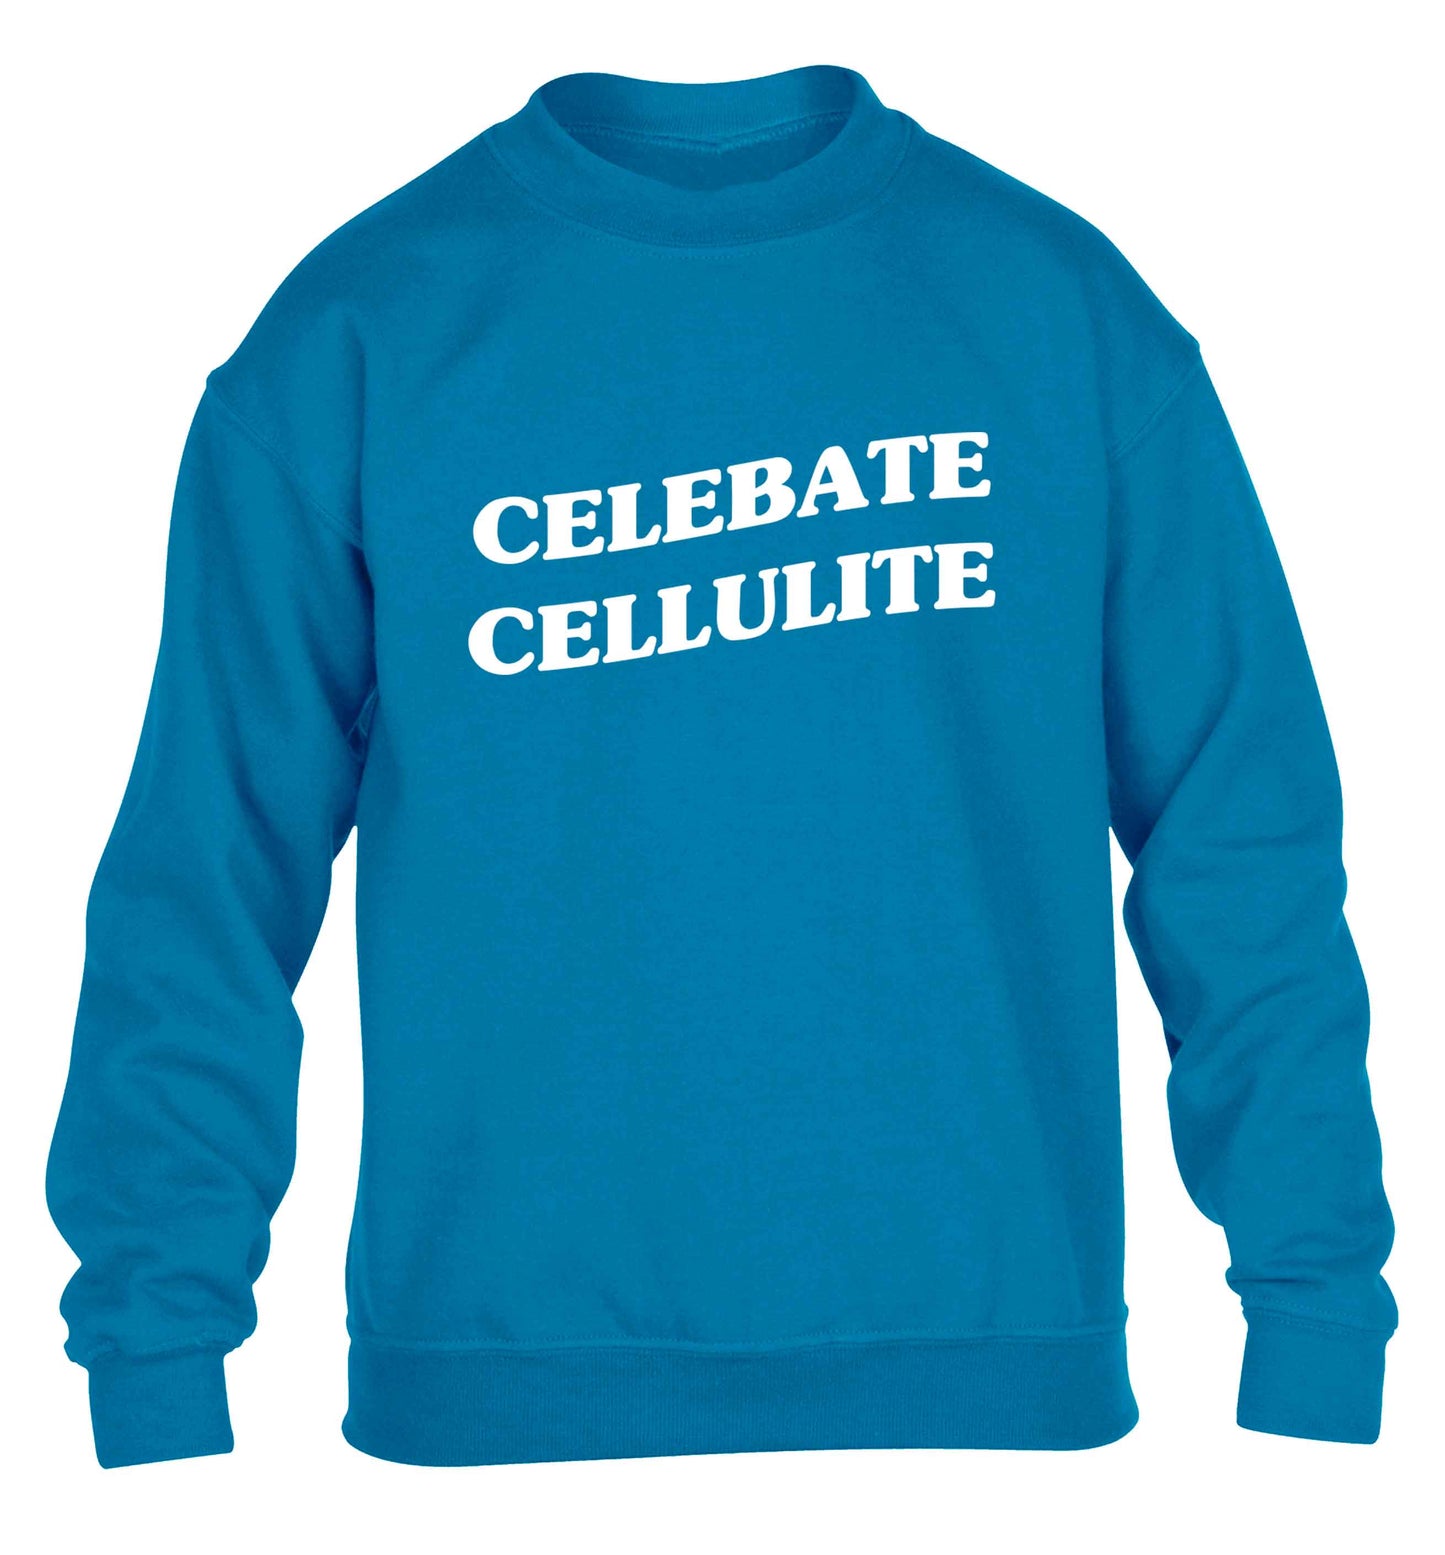 Celebrate cellulite children's blue sweater 12-13 Years